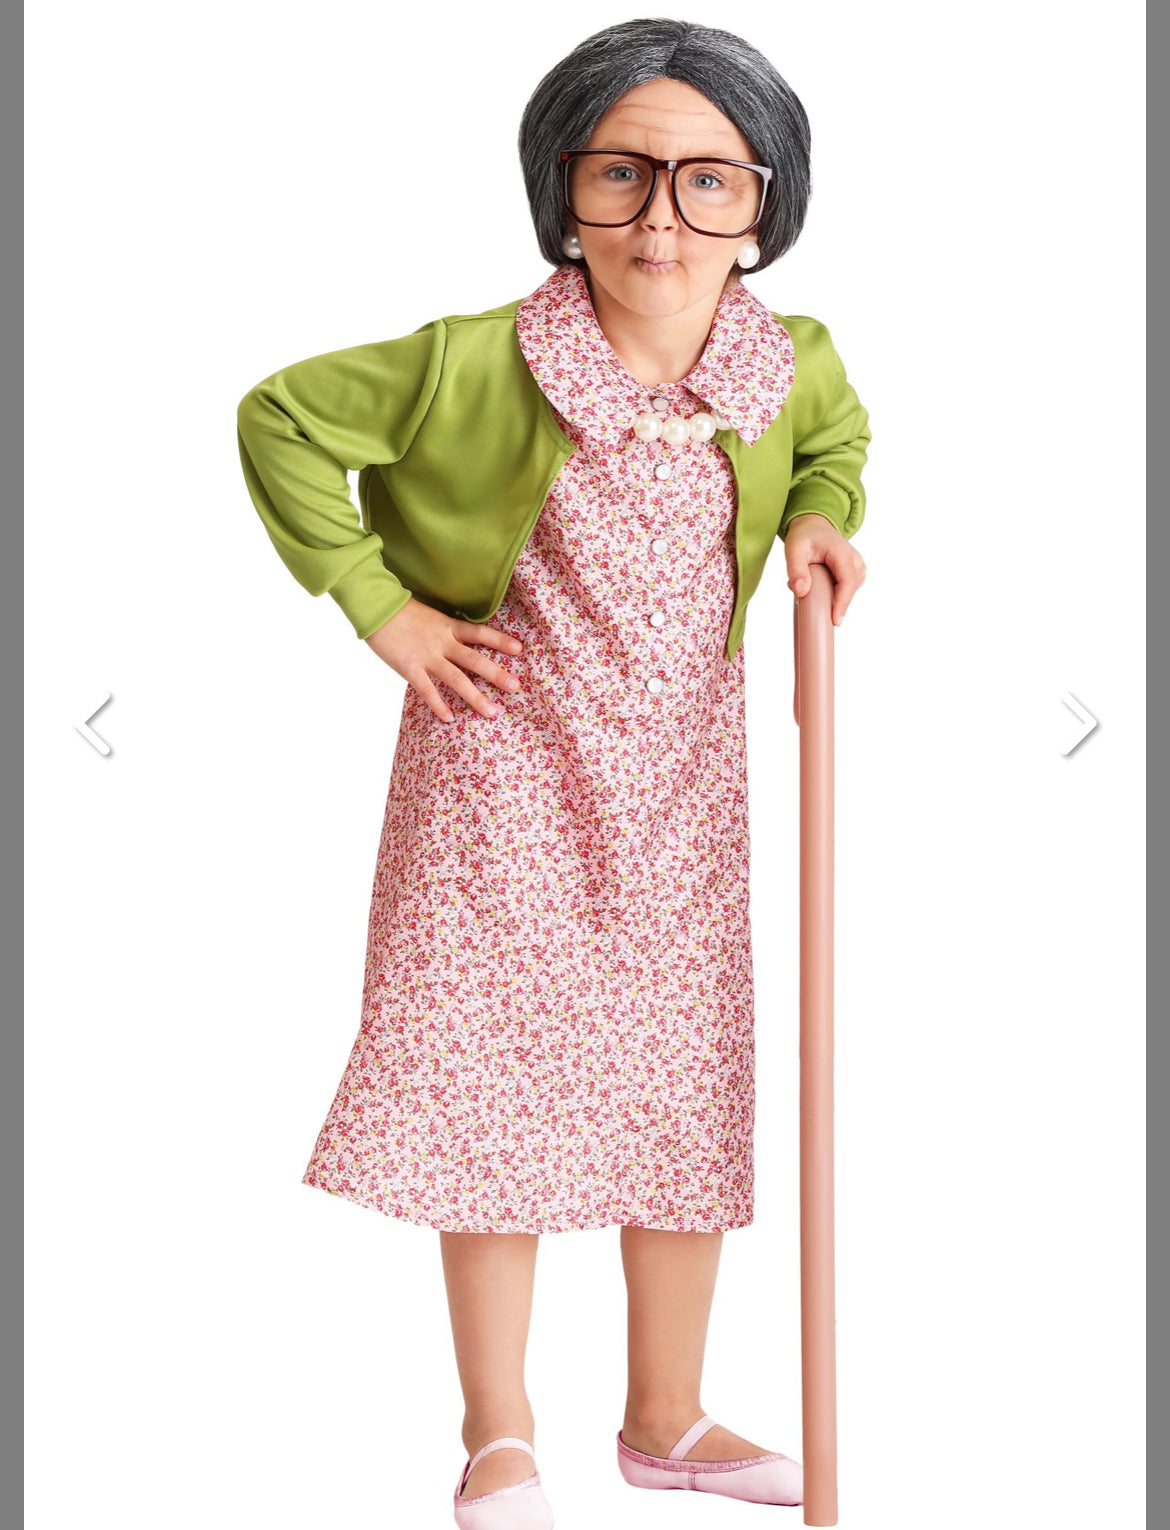 Grandma Costume for Kids